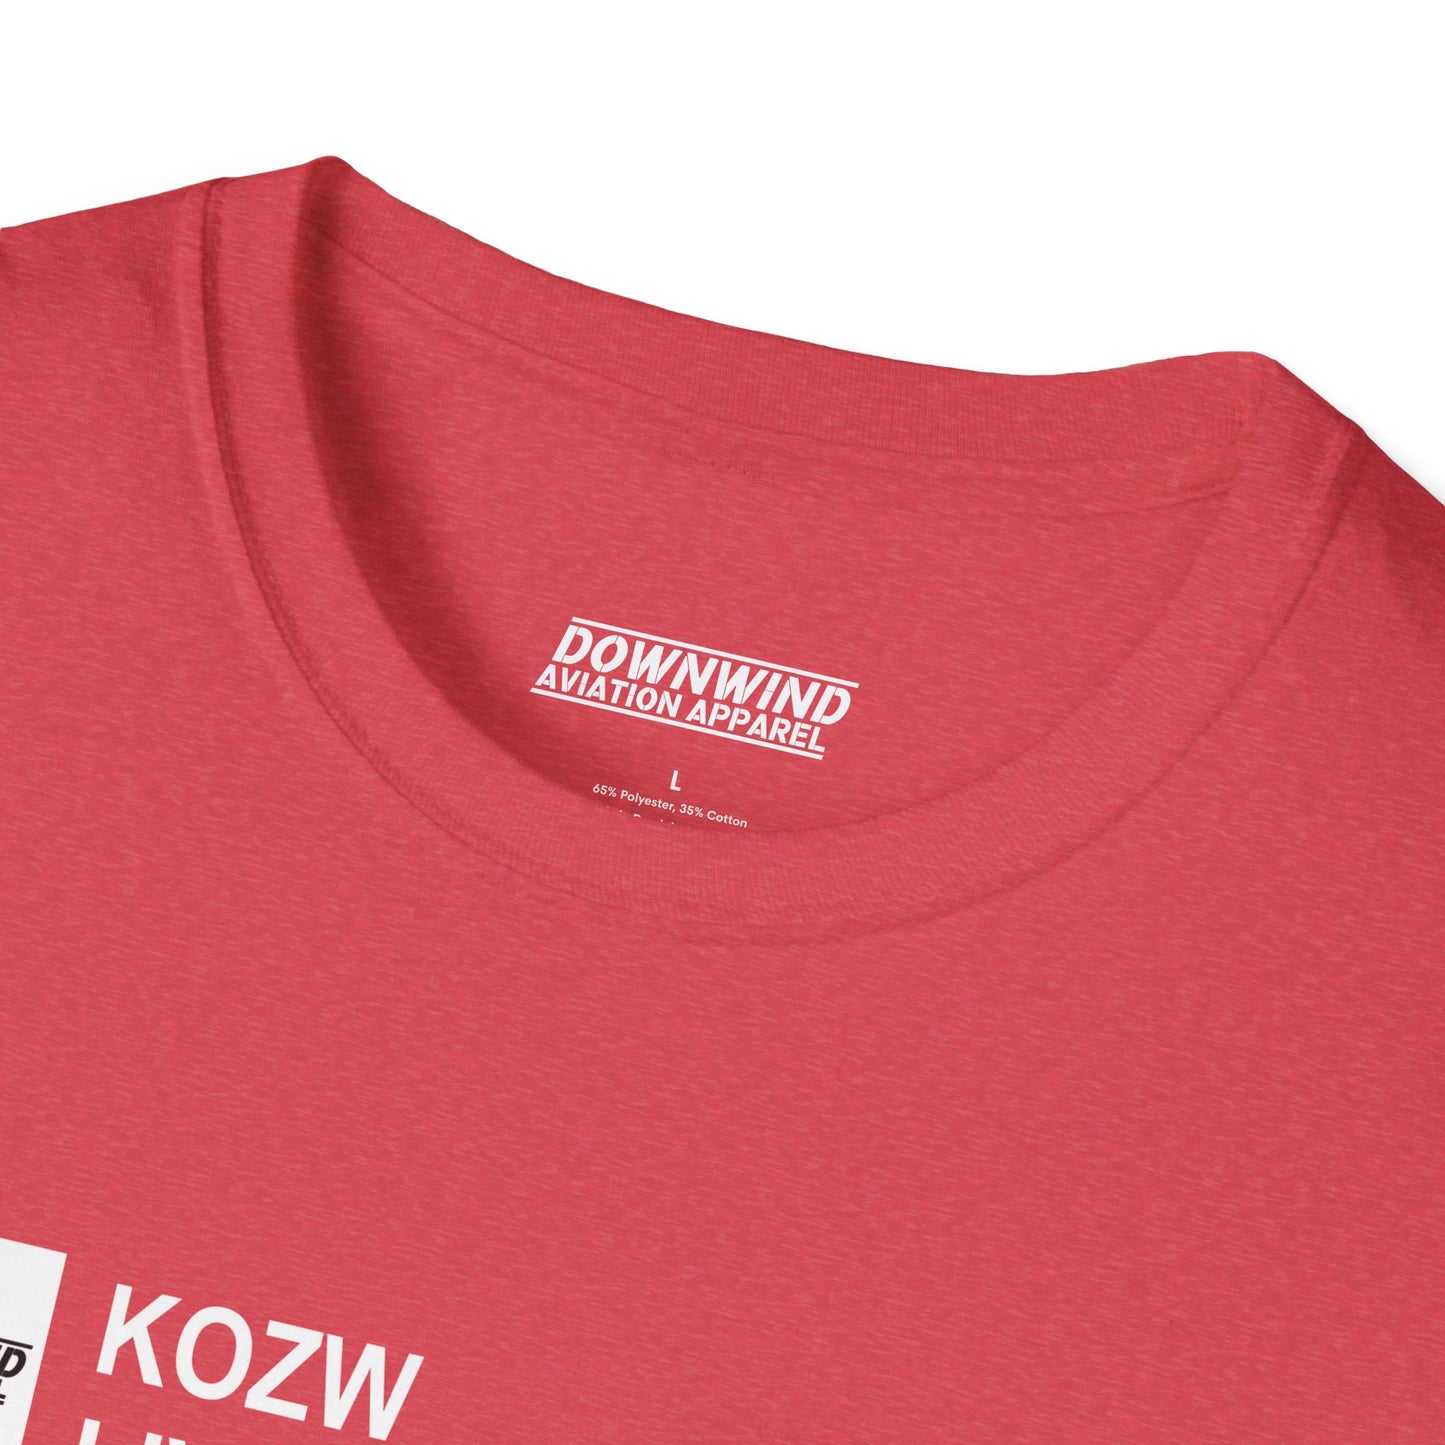 KOZW / Livingston County T-Shirt